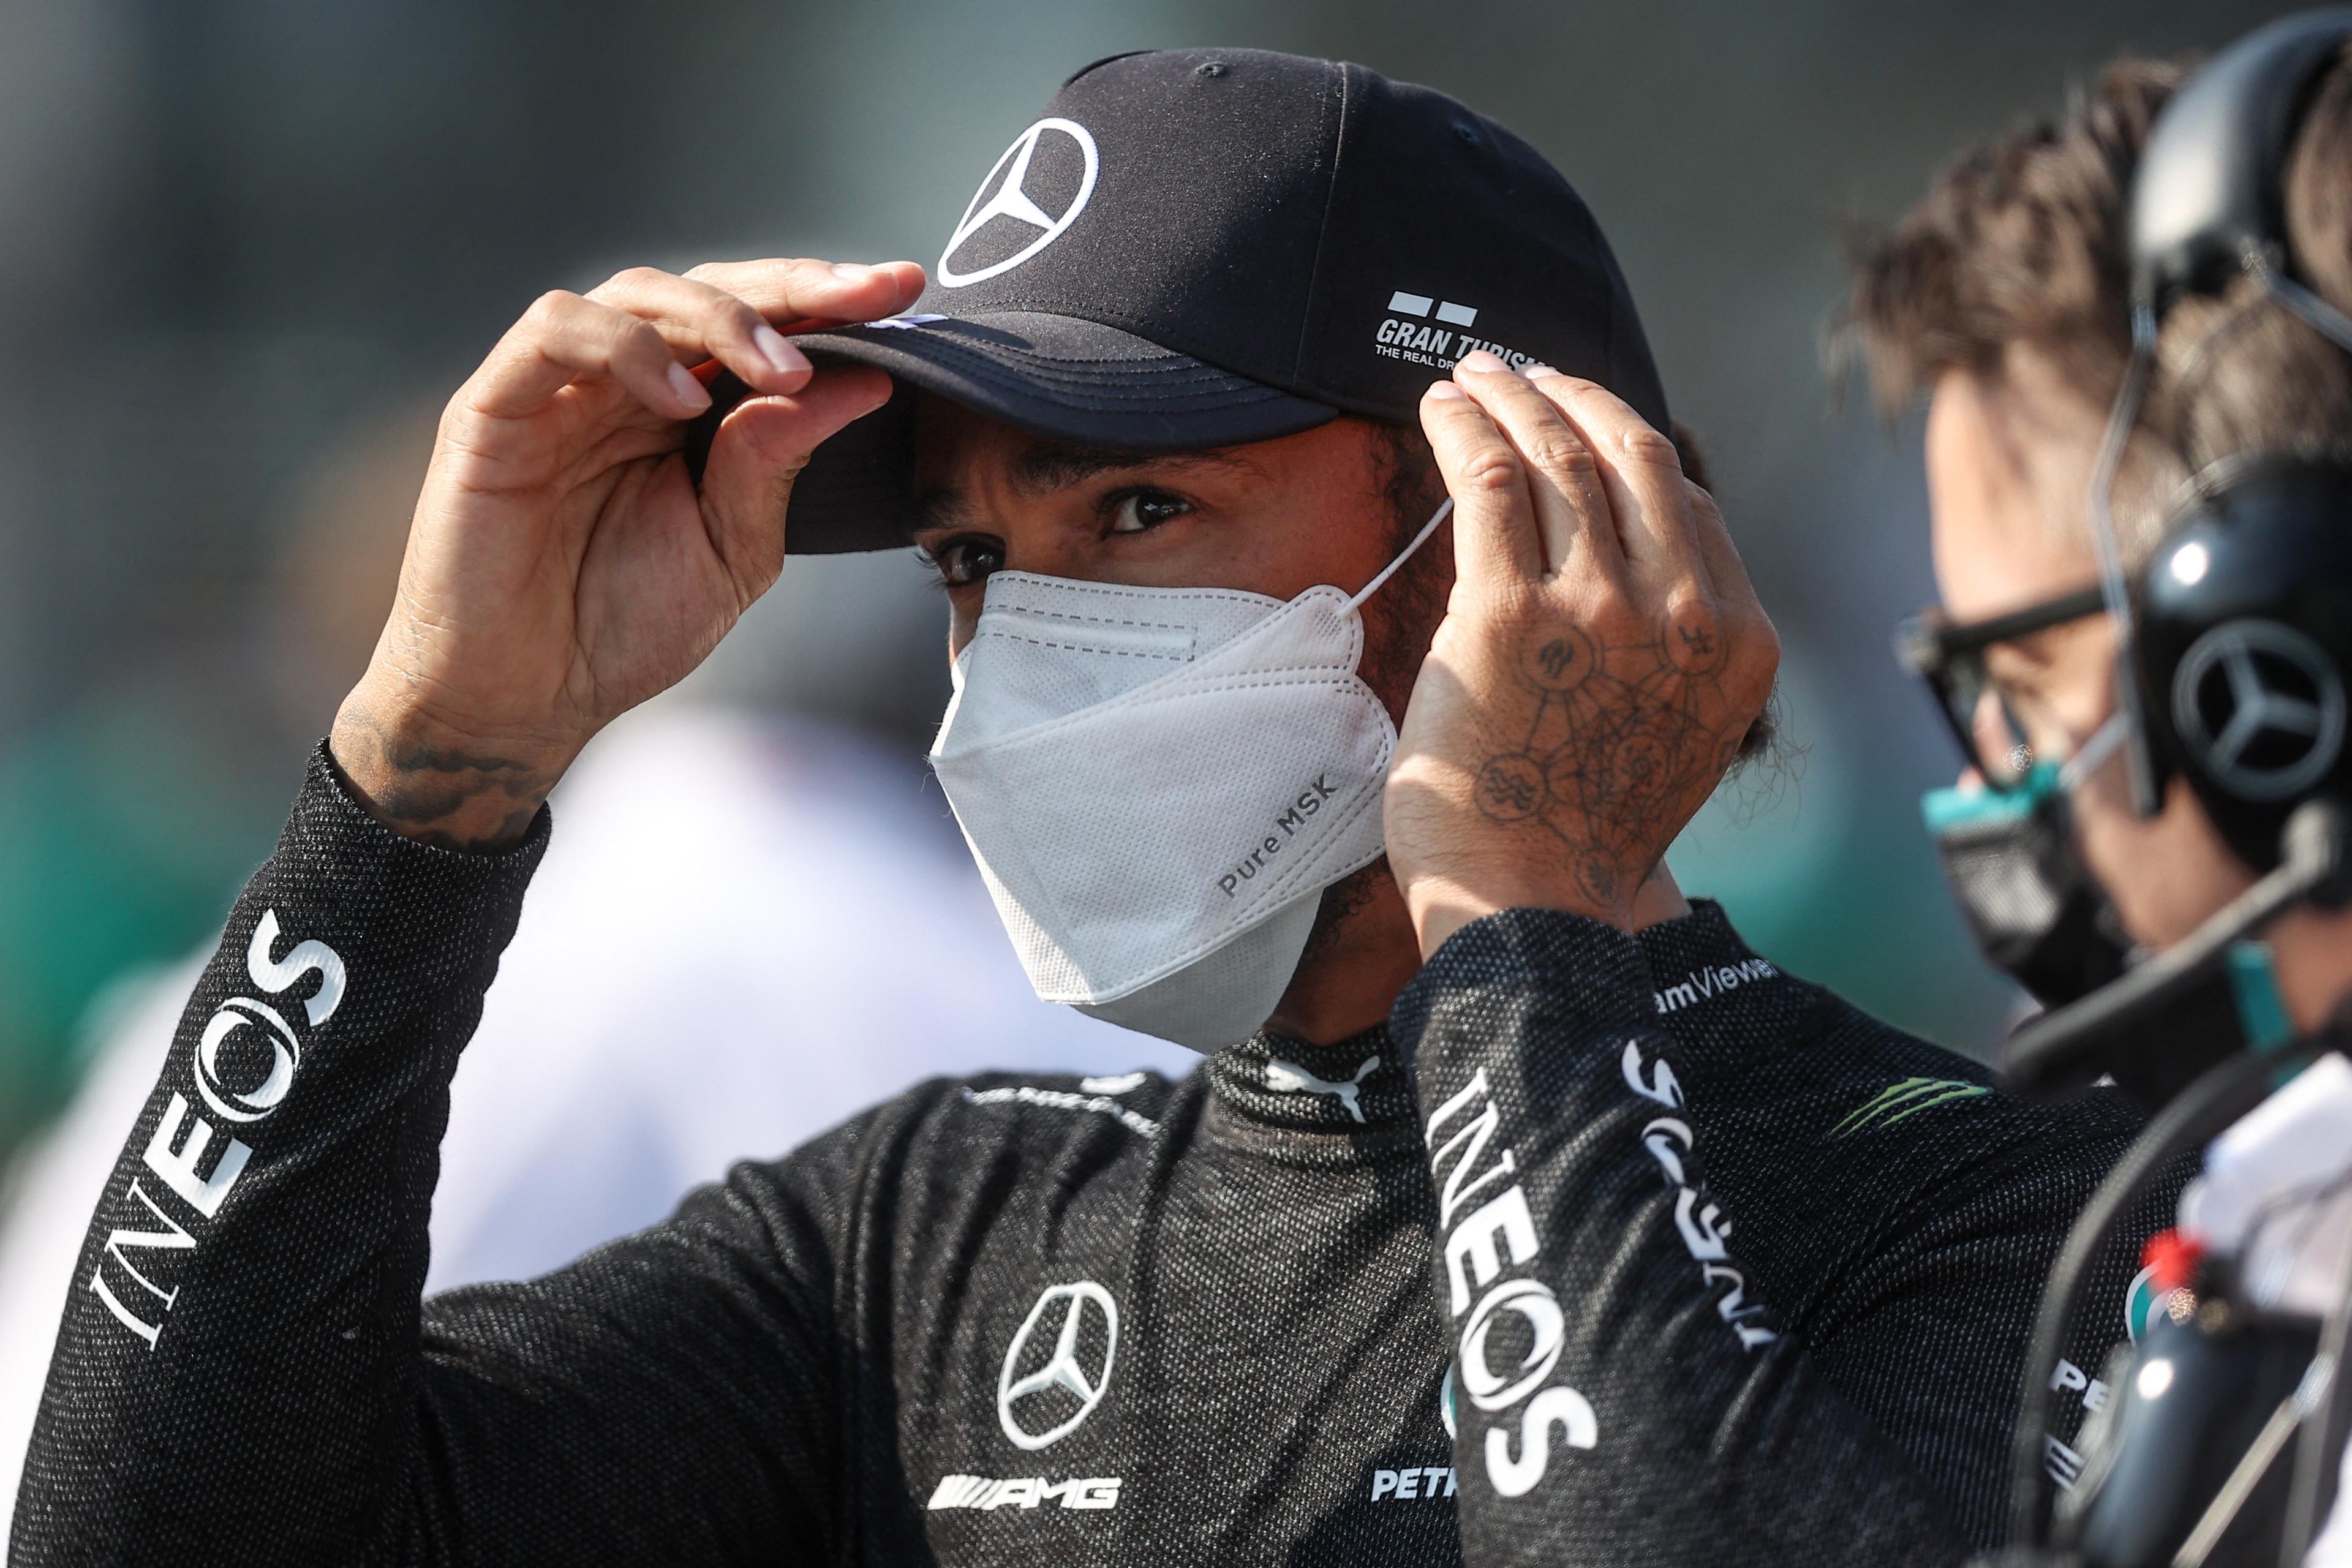 F1: Lewis Hamilton Thinks Often About Retiring